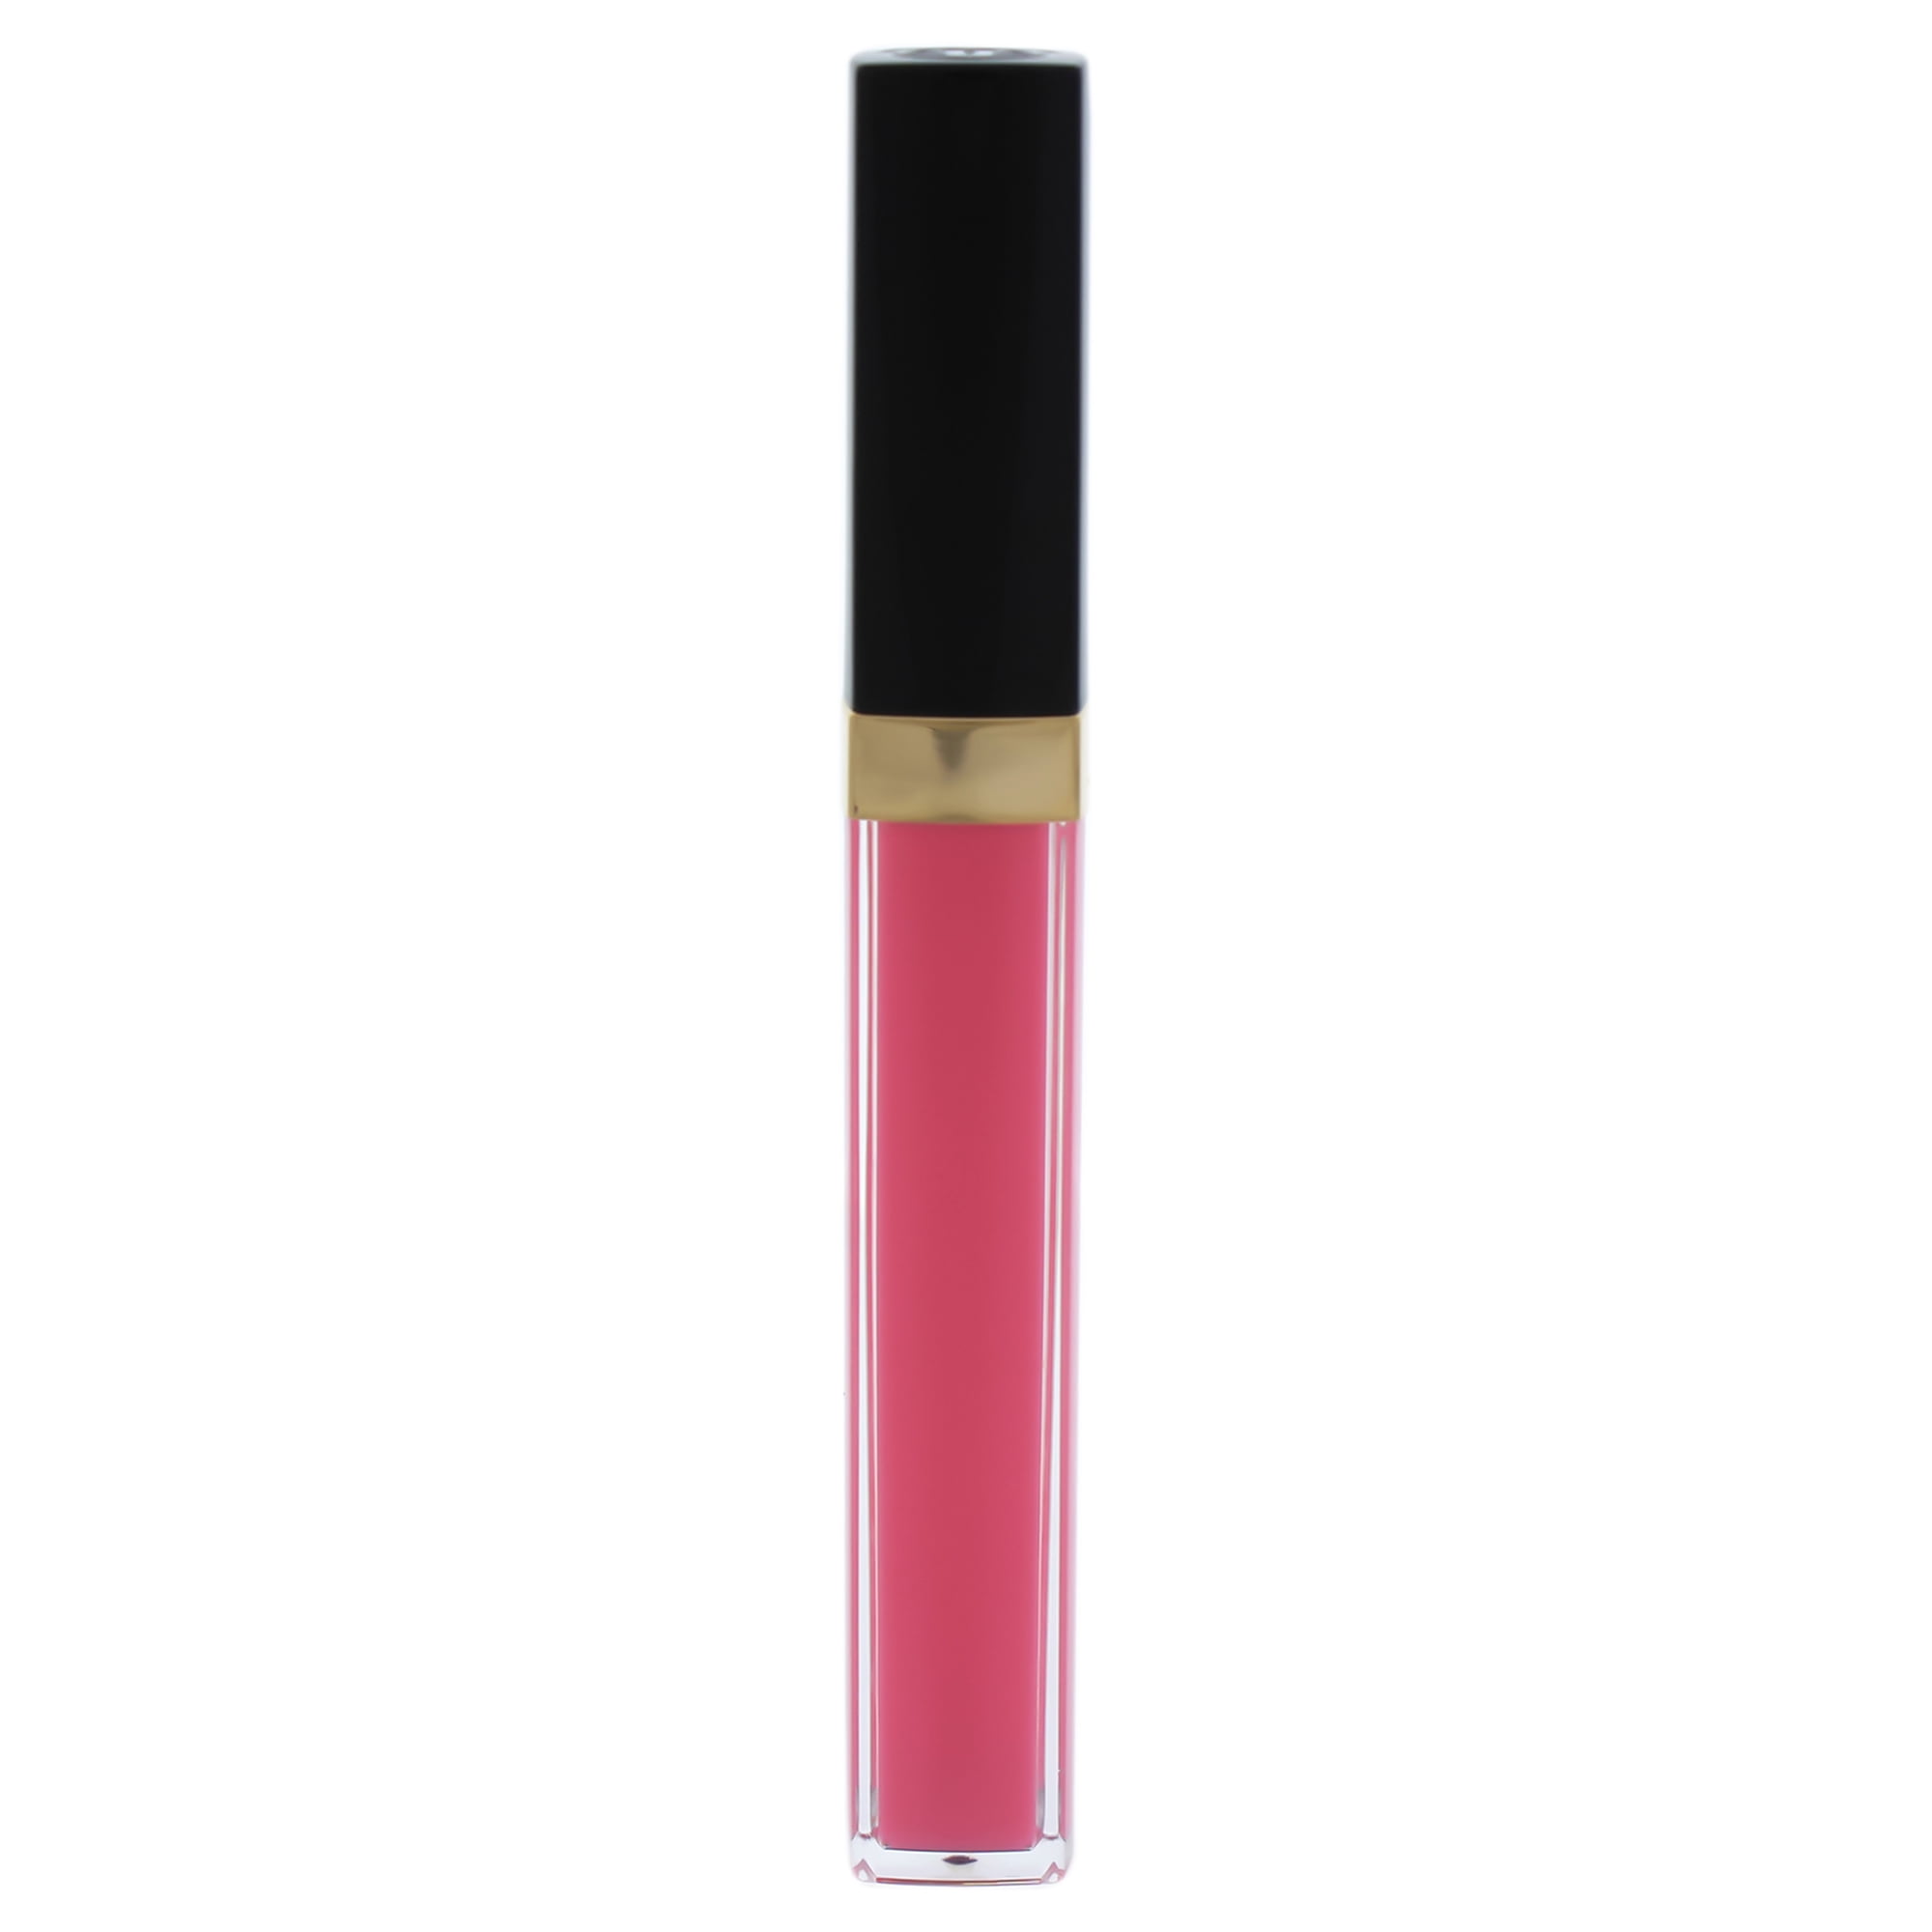 Chanel Rouge Coco Ultra Hydrating Lip Colour #416 Coco & #454 Jean